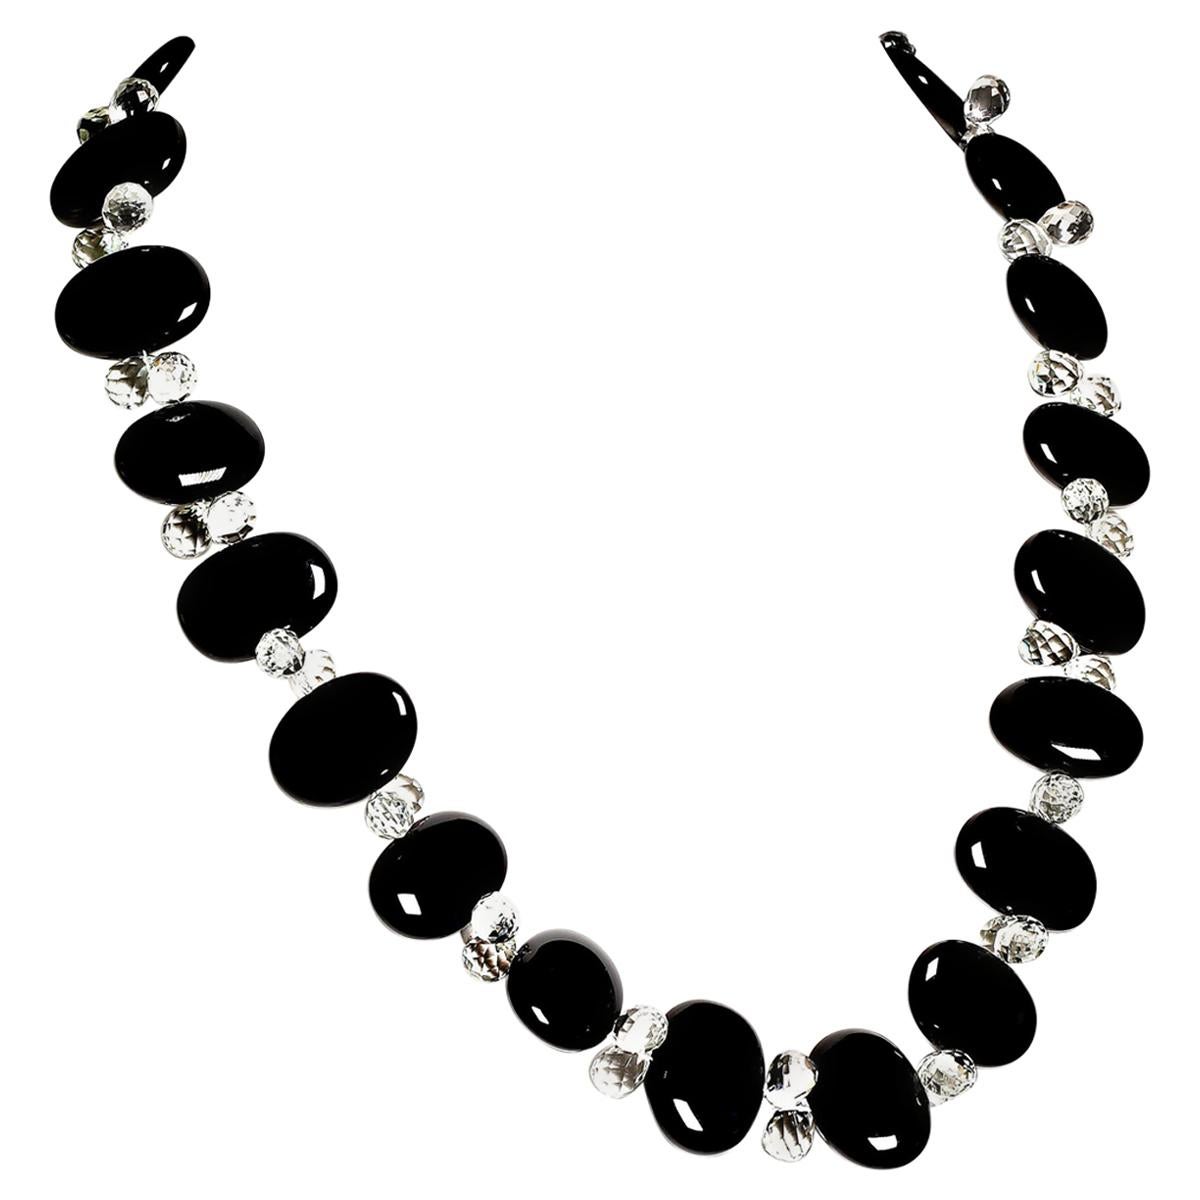 Stunningly Elegant Black Onyx and Quartz Crystal Necklace